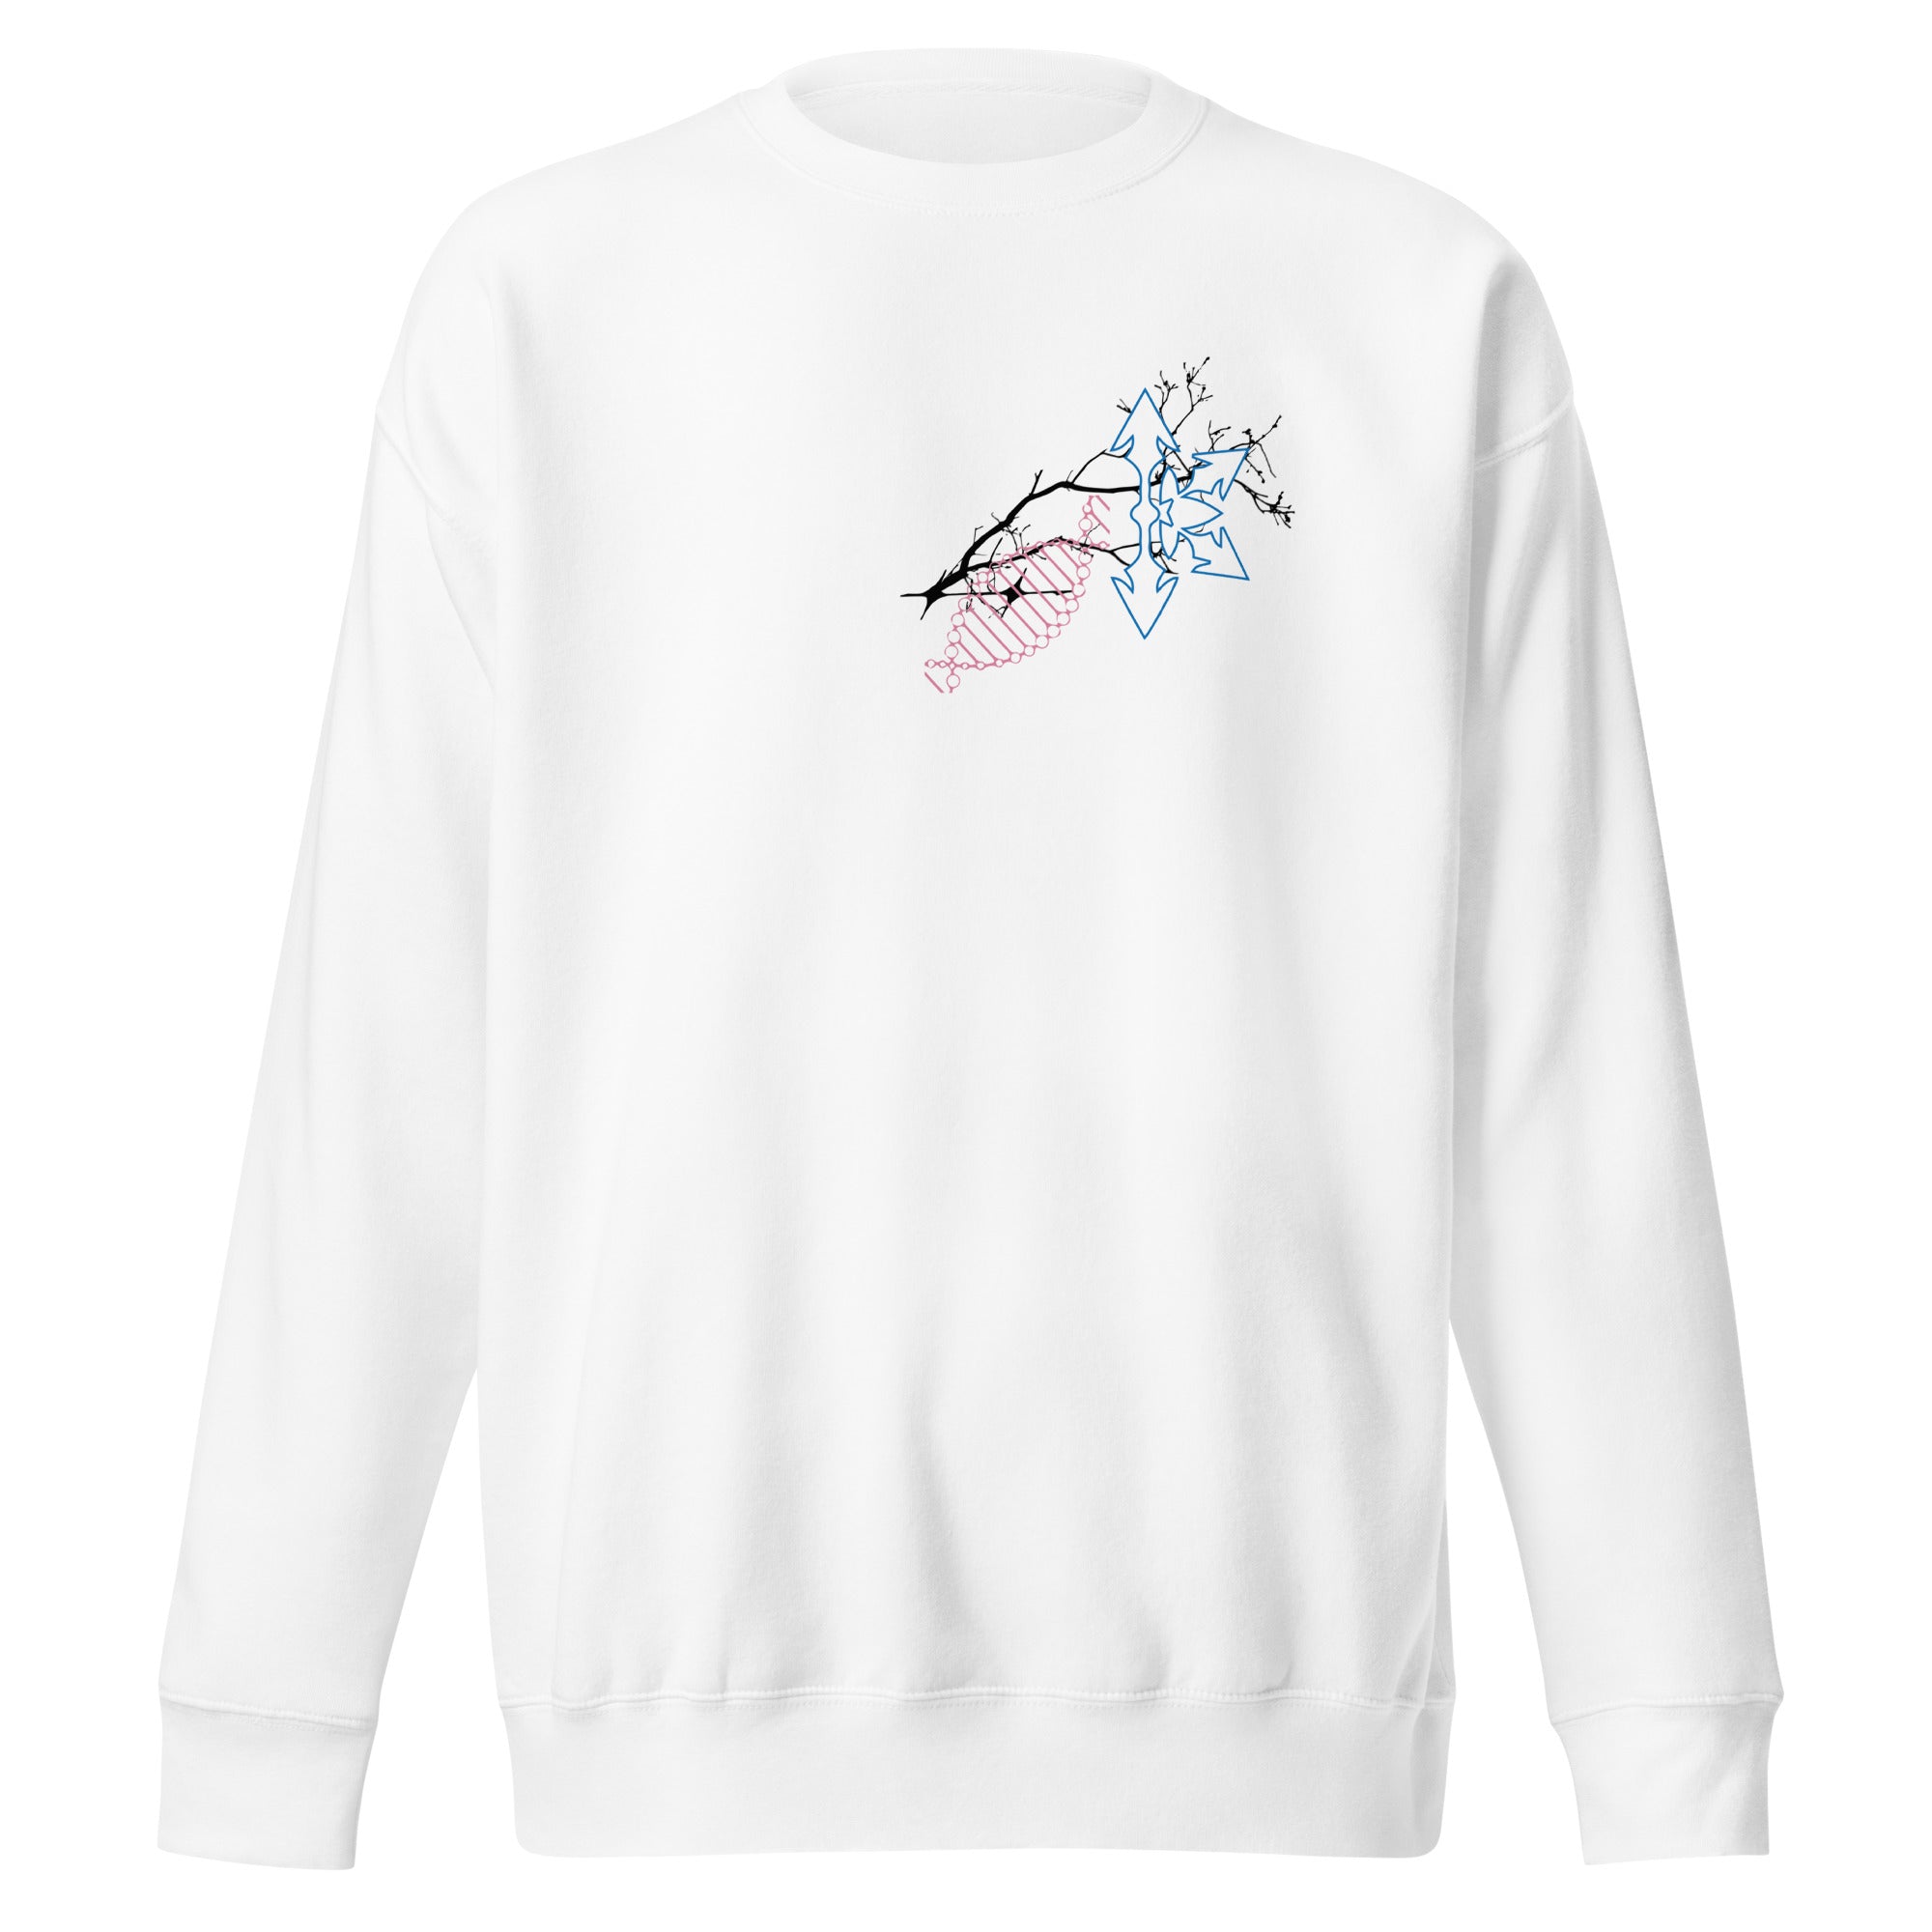 INQUIRIES • sweatshirt - Jackler - anime-inspired streetwear - anime clothing